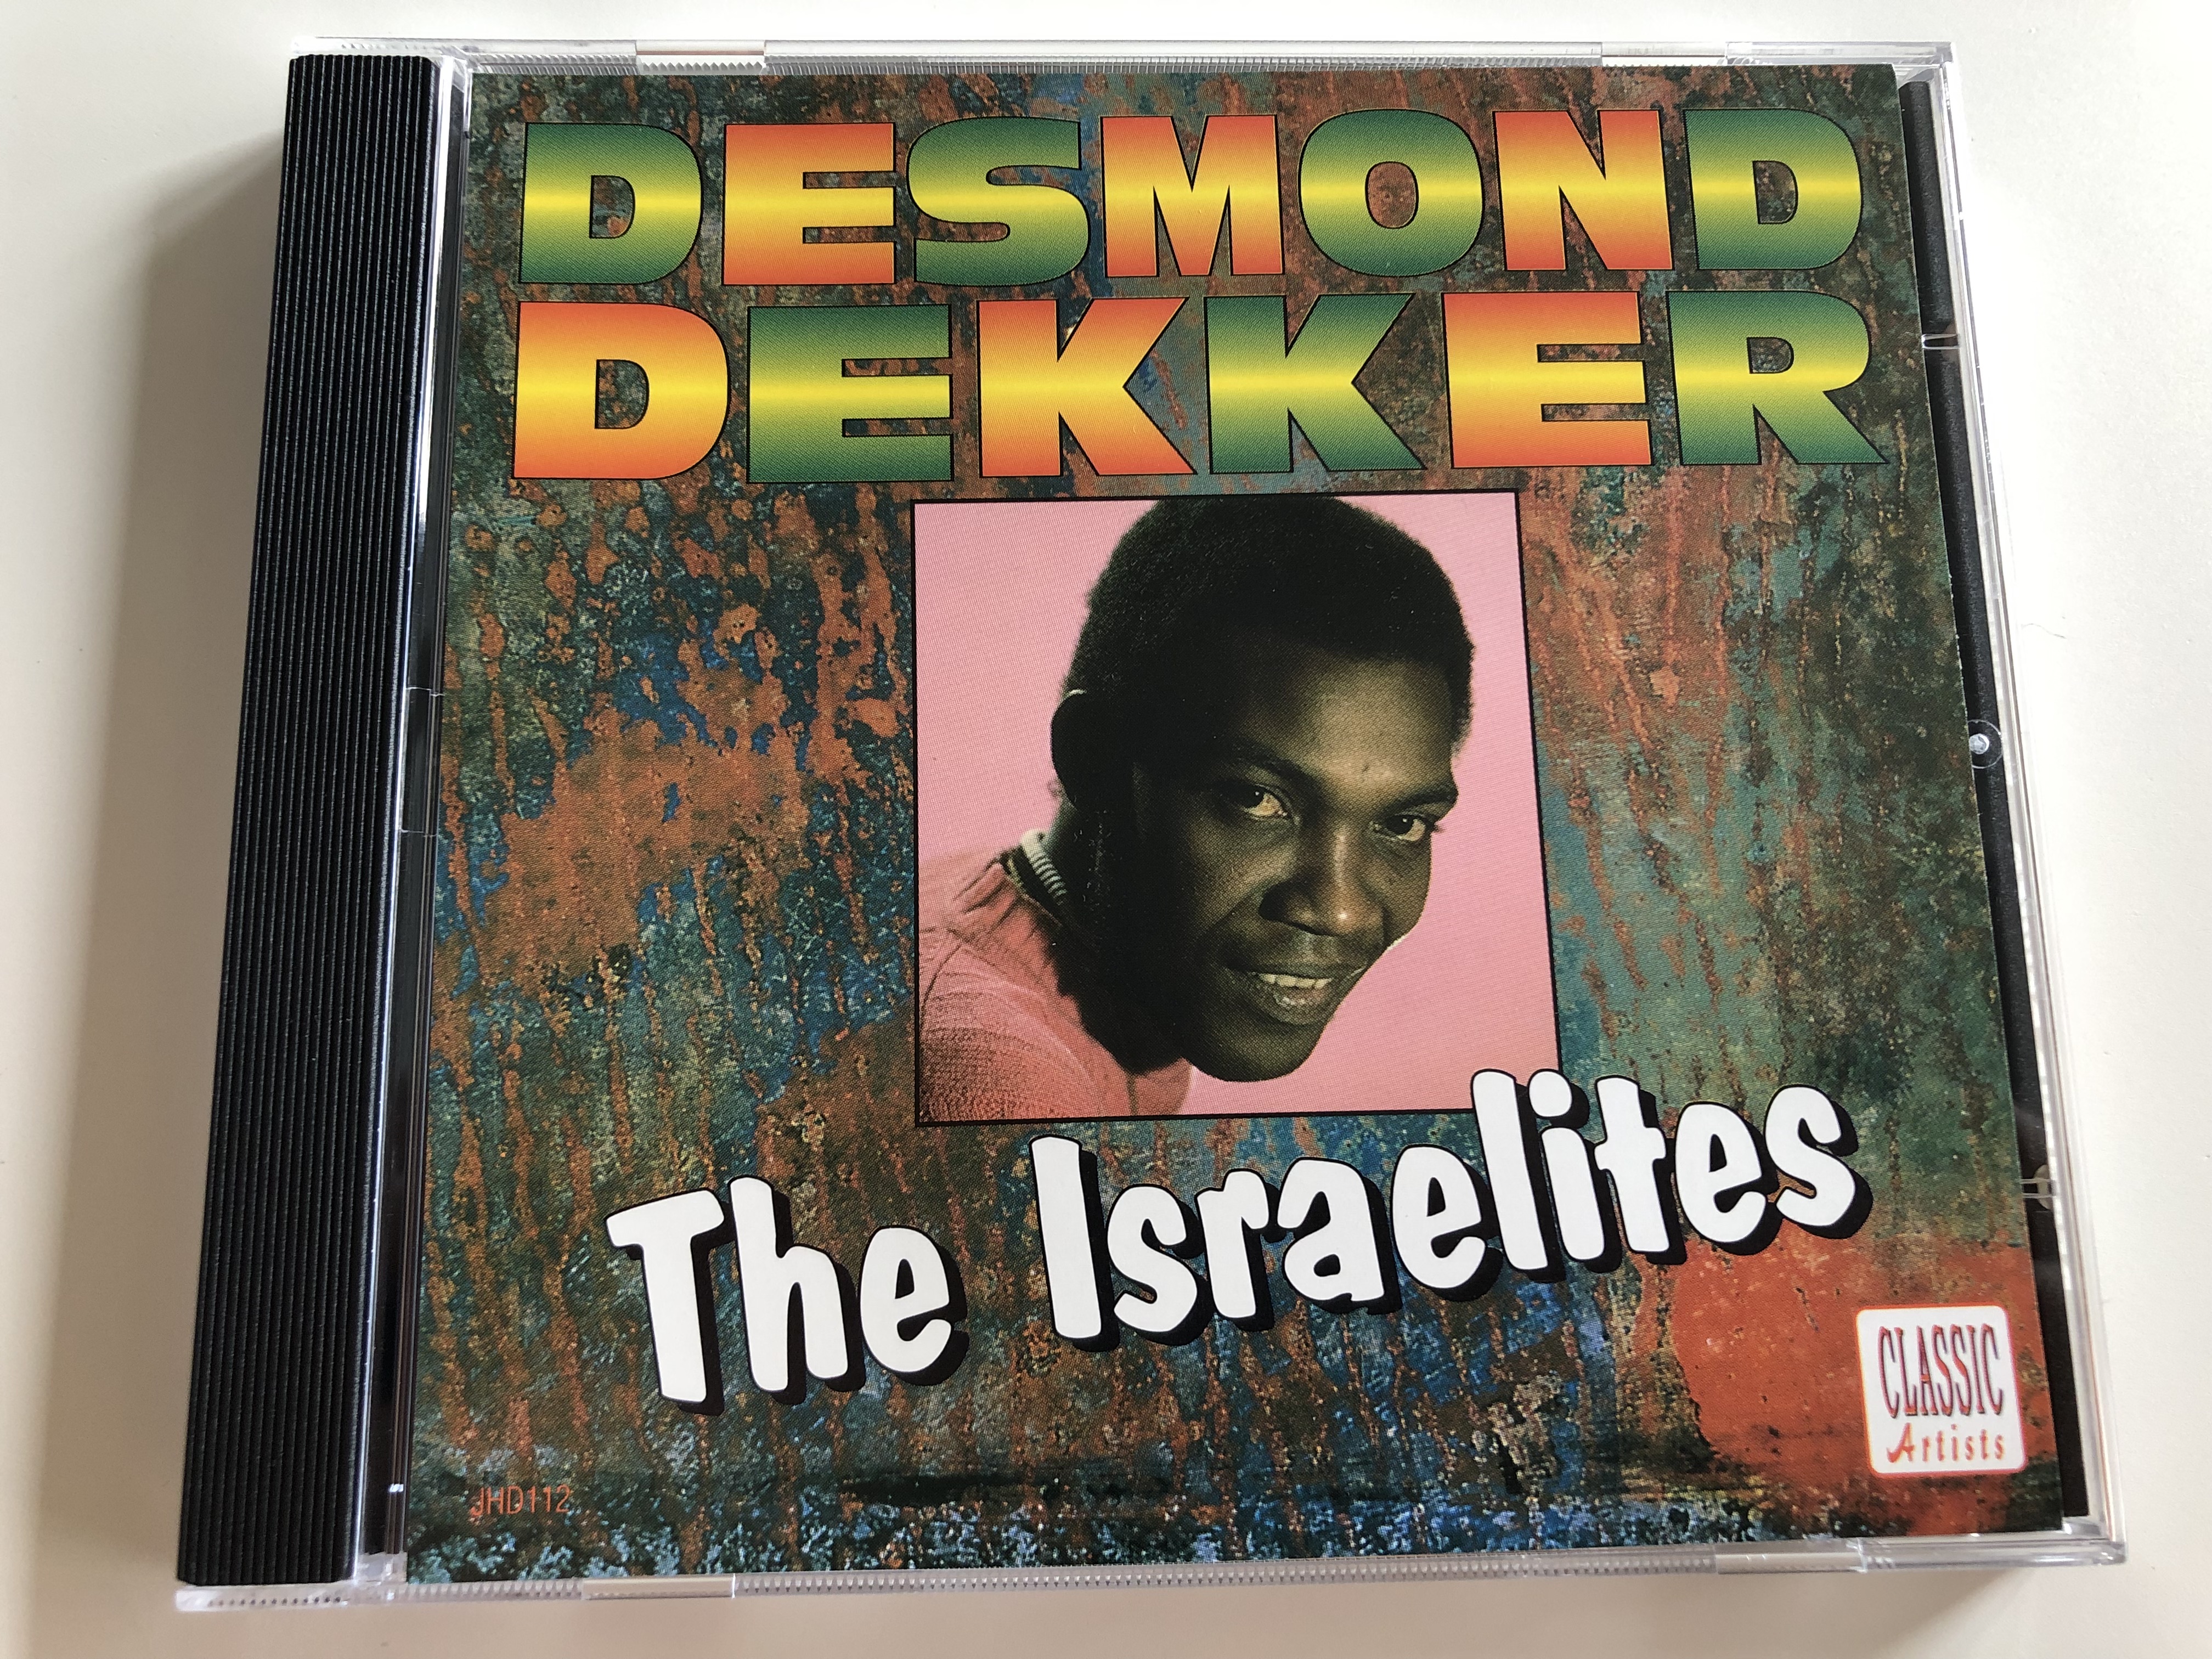 desmond-dekker-the-israelites-perseverance-peace-of-mind-my-precious-love-classic-artists-audio-cd-jhd-112-1-.jpg